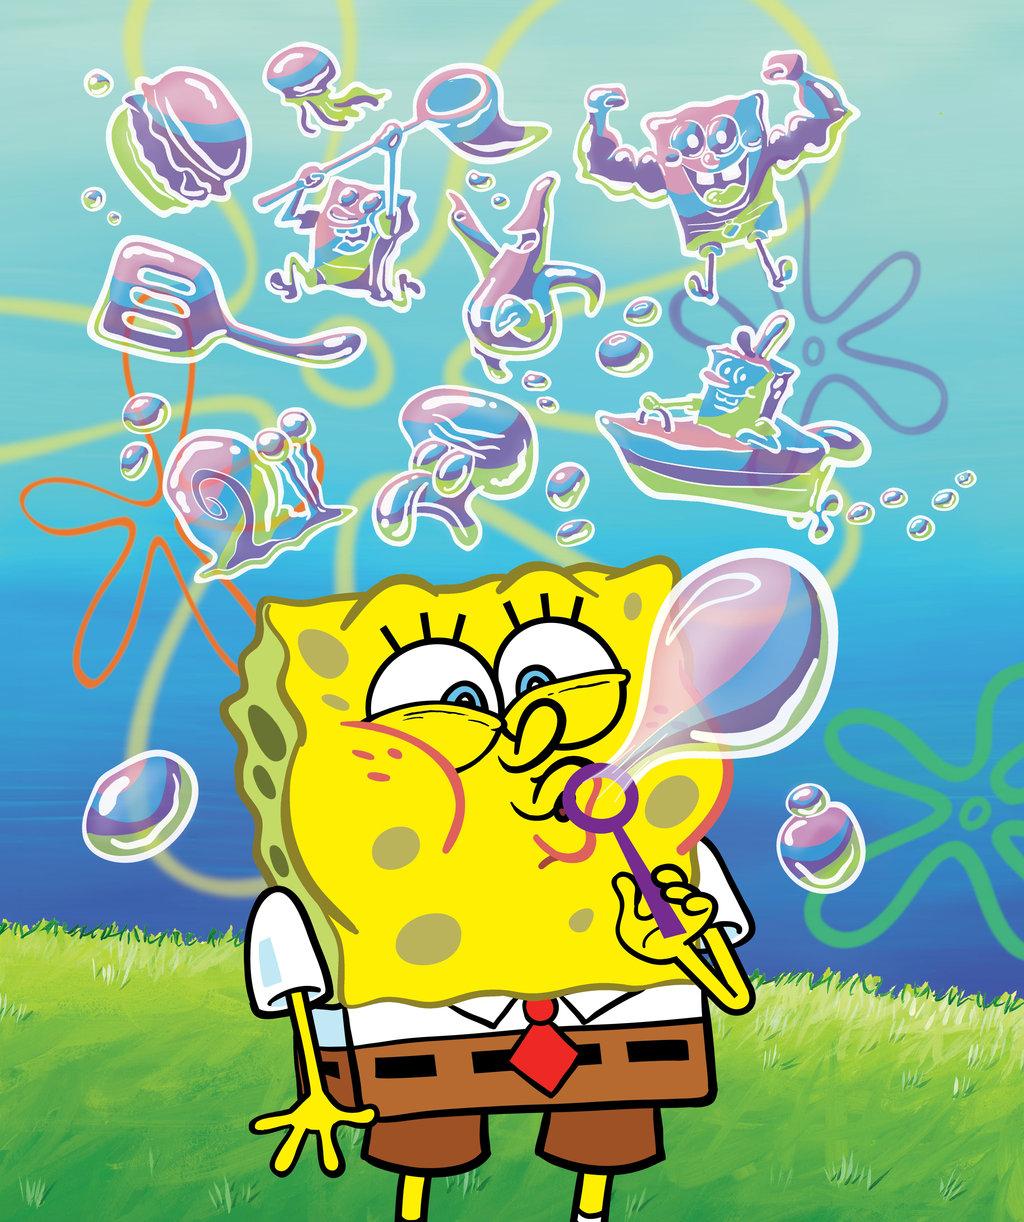 Gambar Foto Kartun Spongebob Lucu - Gambar Kata Kata